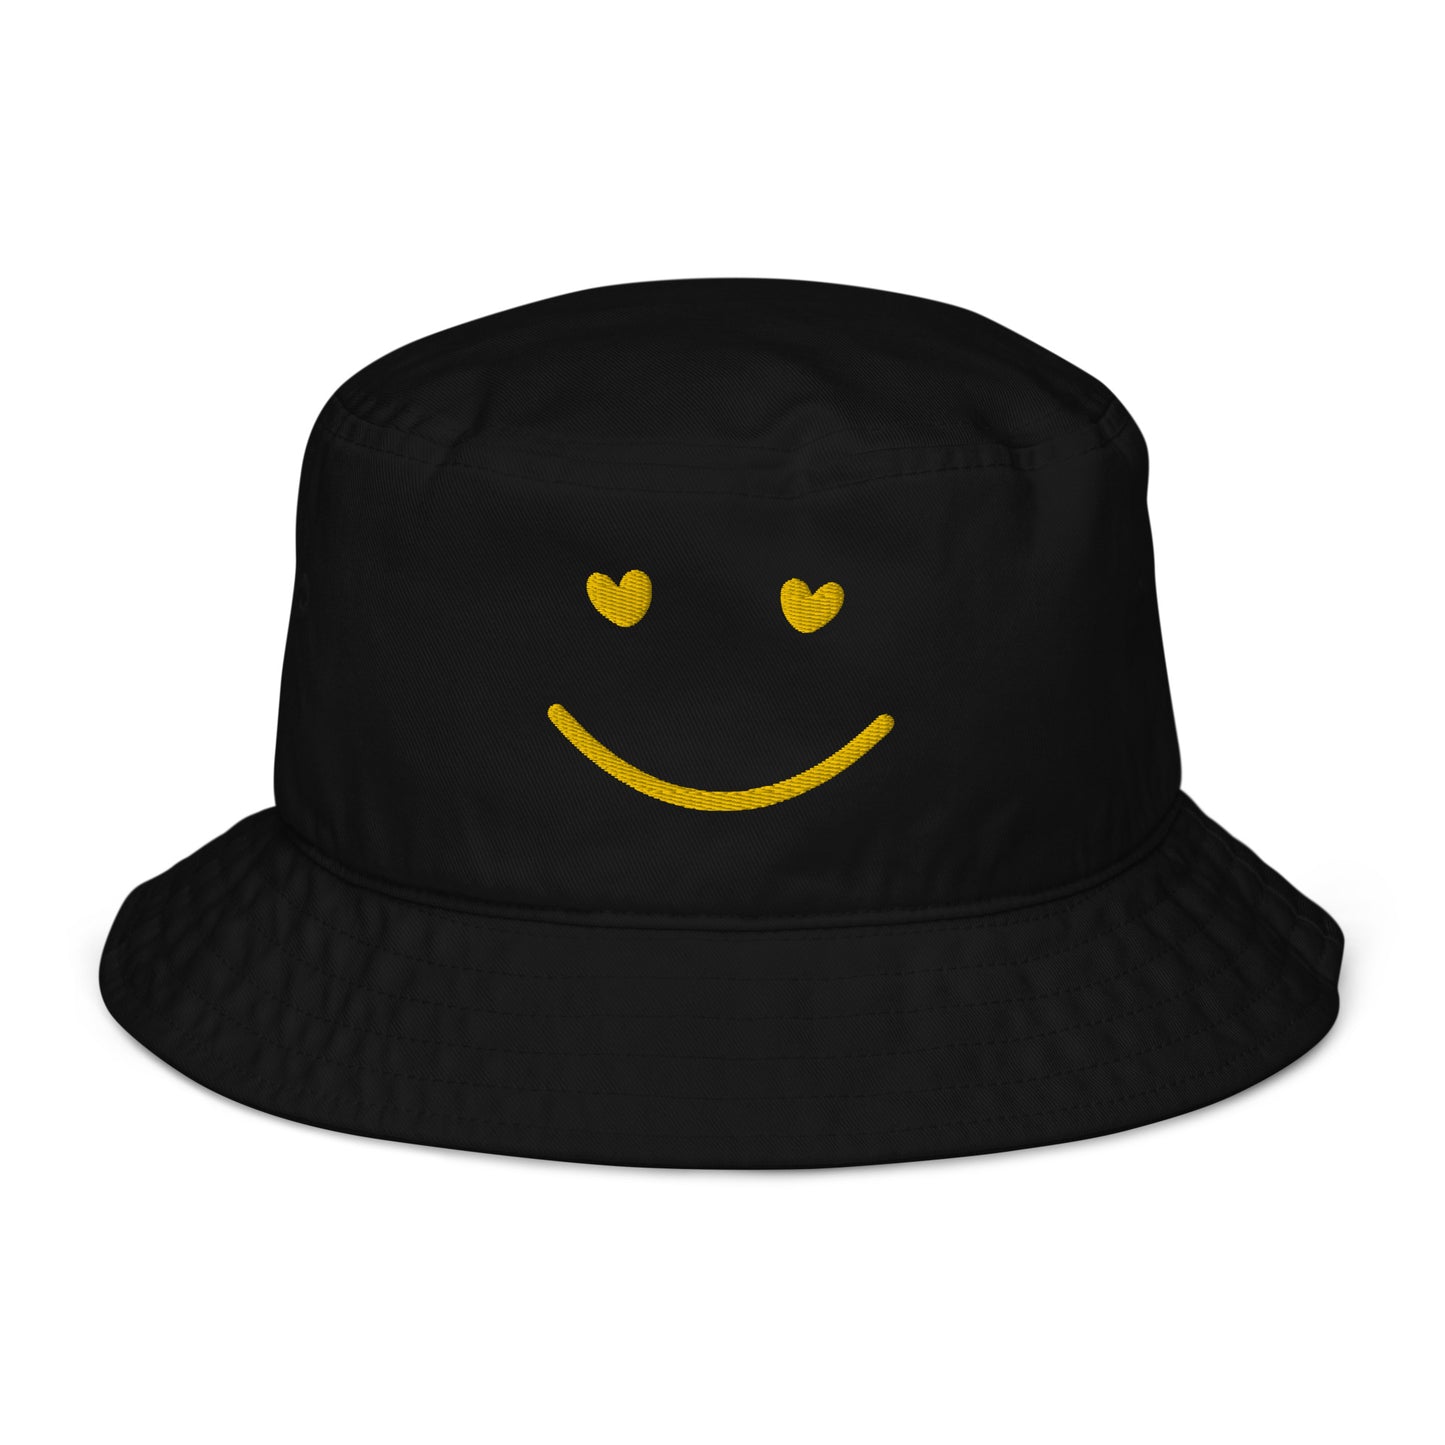 Smile bucket hat